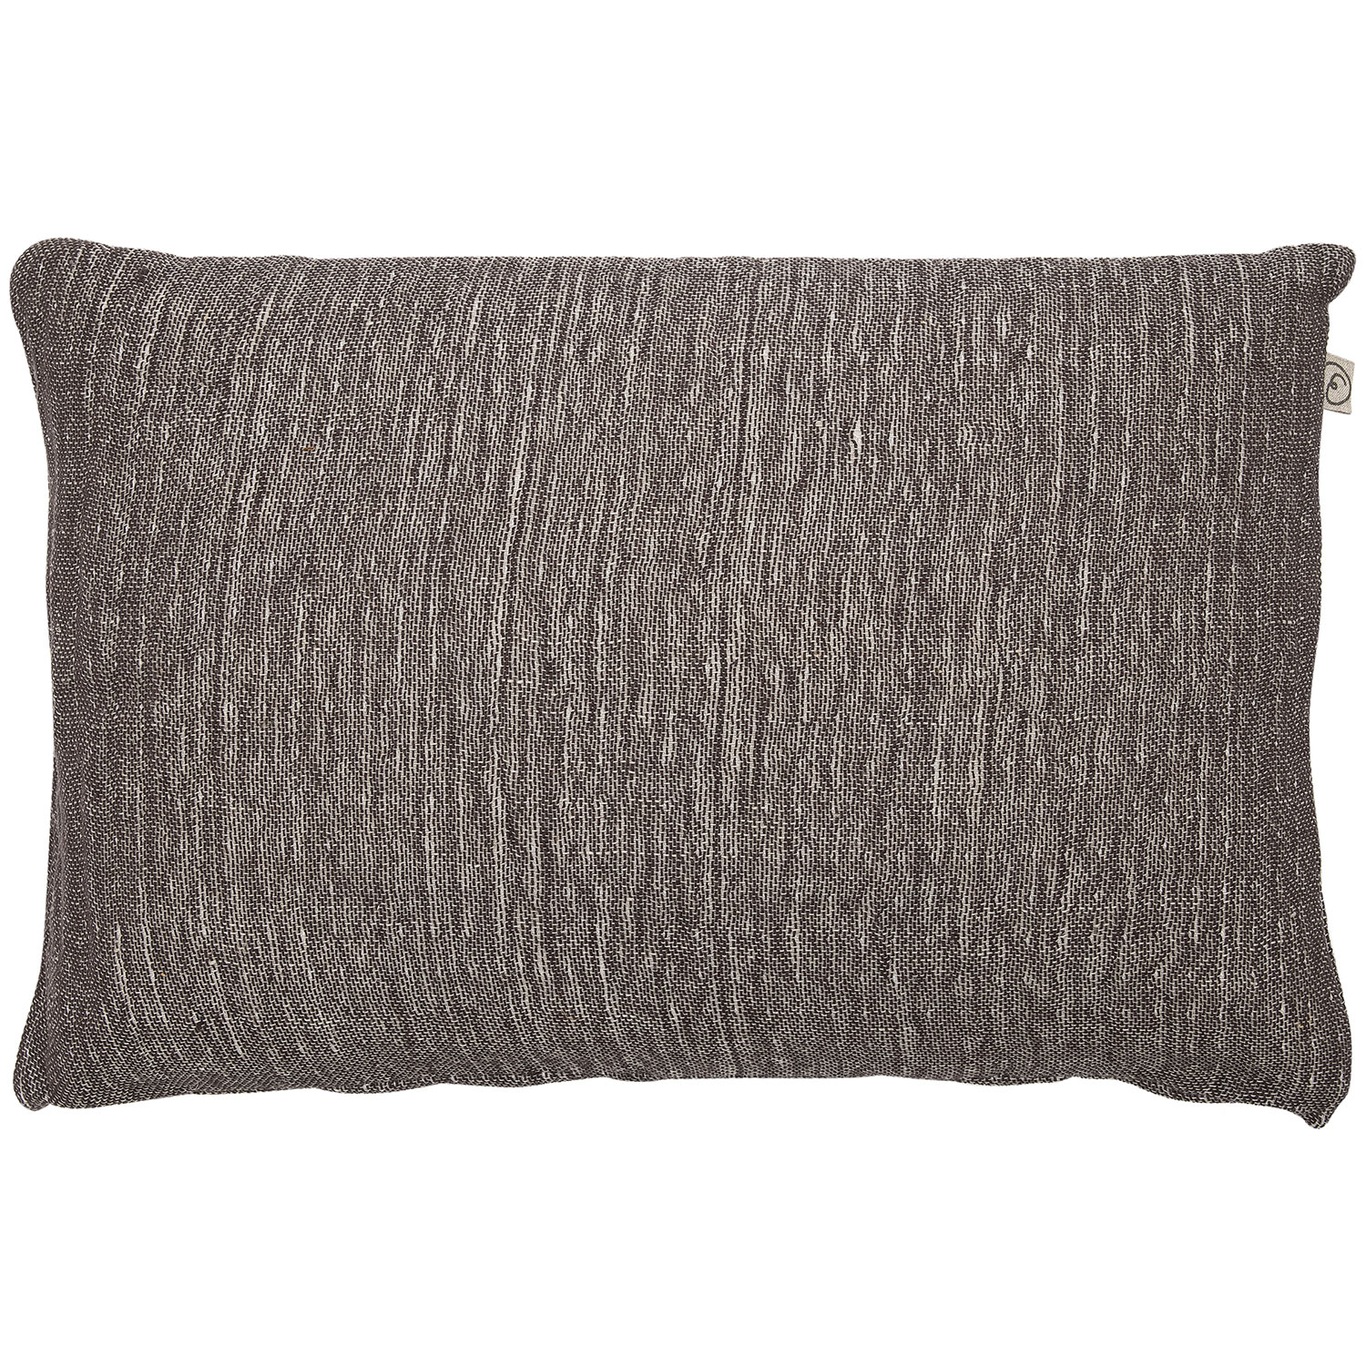 Cushion Cover Cotton / Linen 40x60 cm, Brown